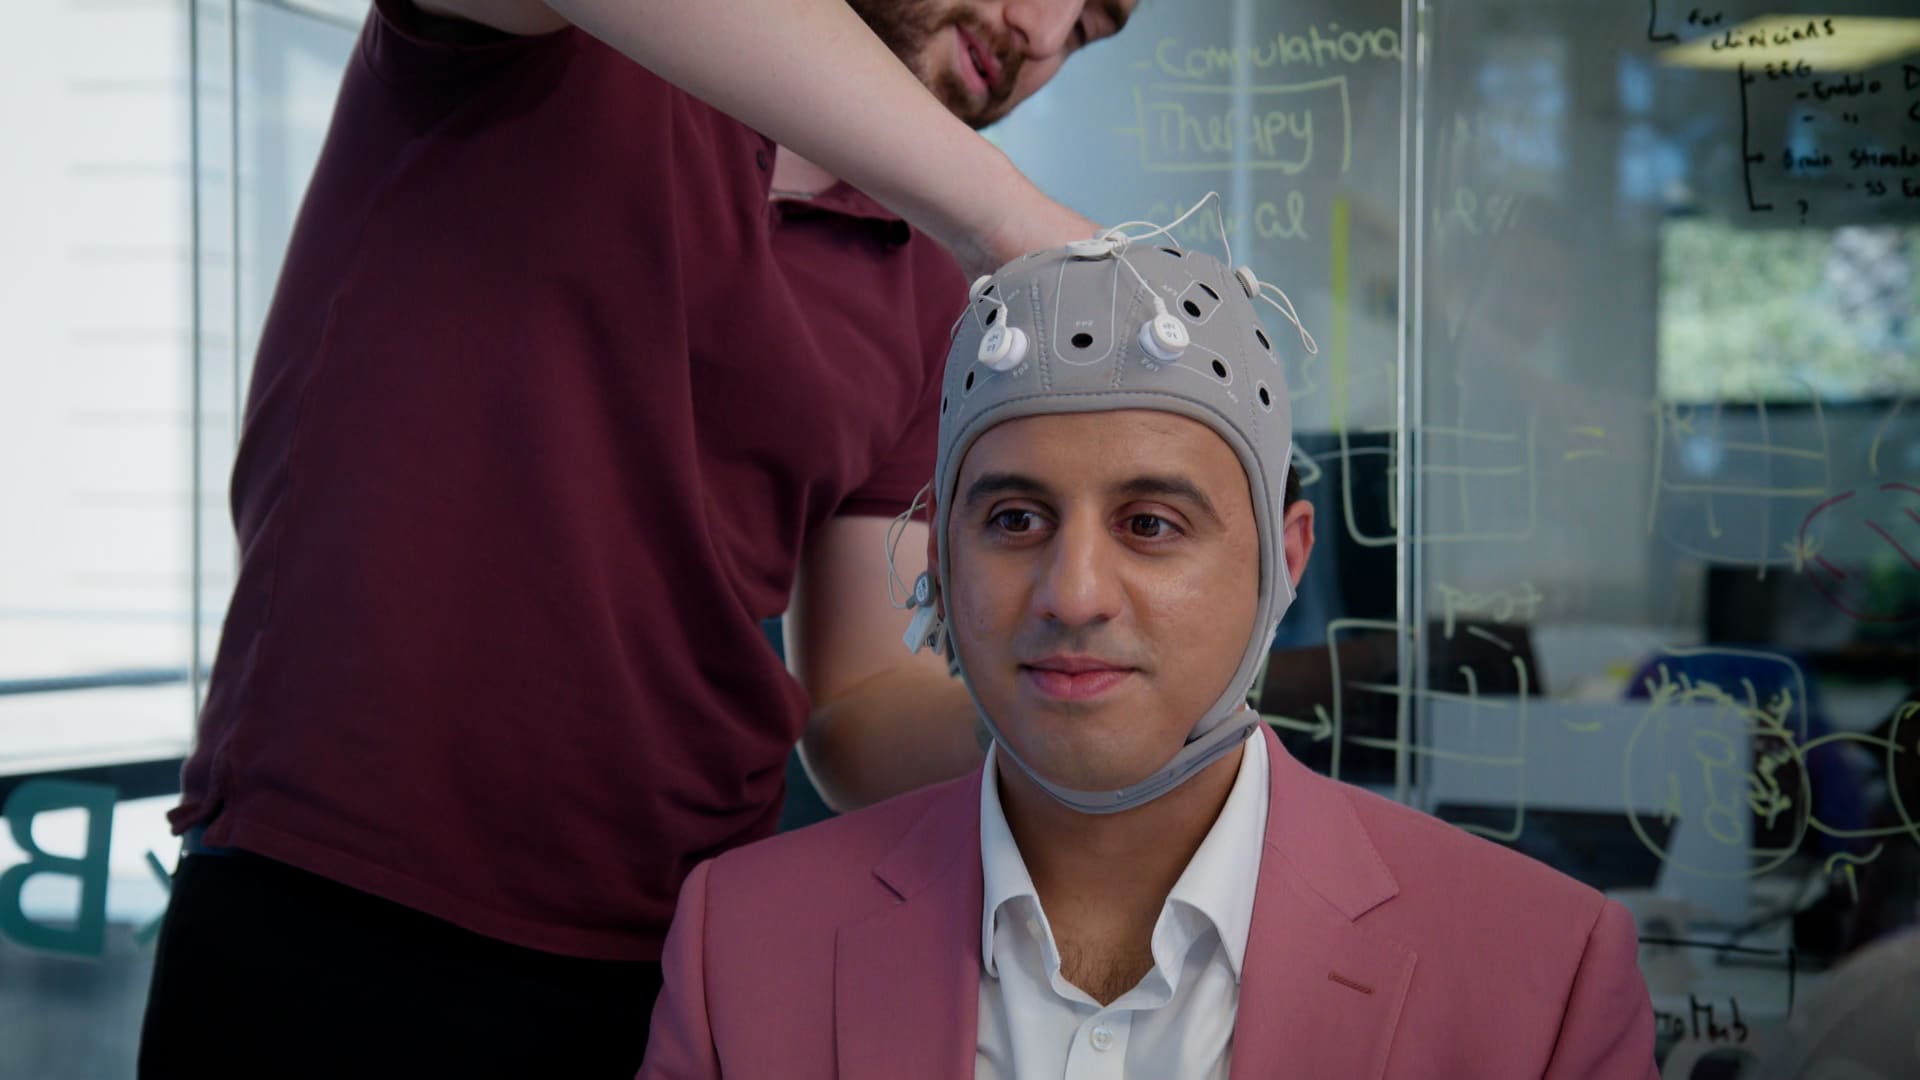 Neuroelectrics hopes to treat epilepsy with non-invasive headcap [Video]